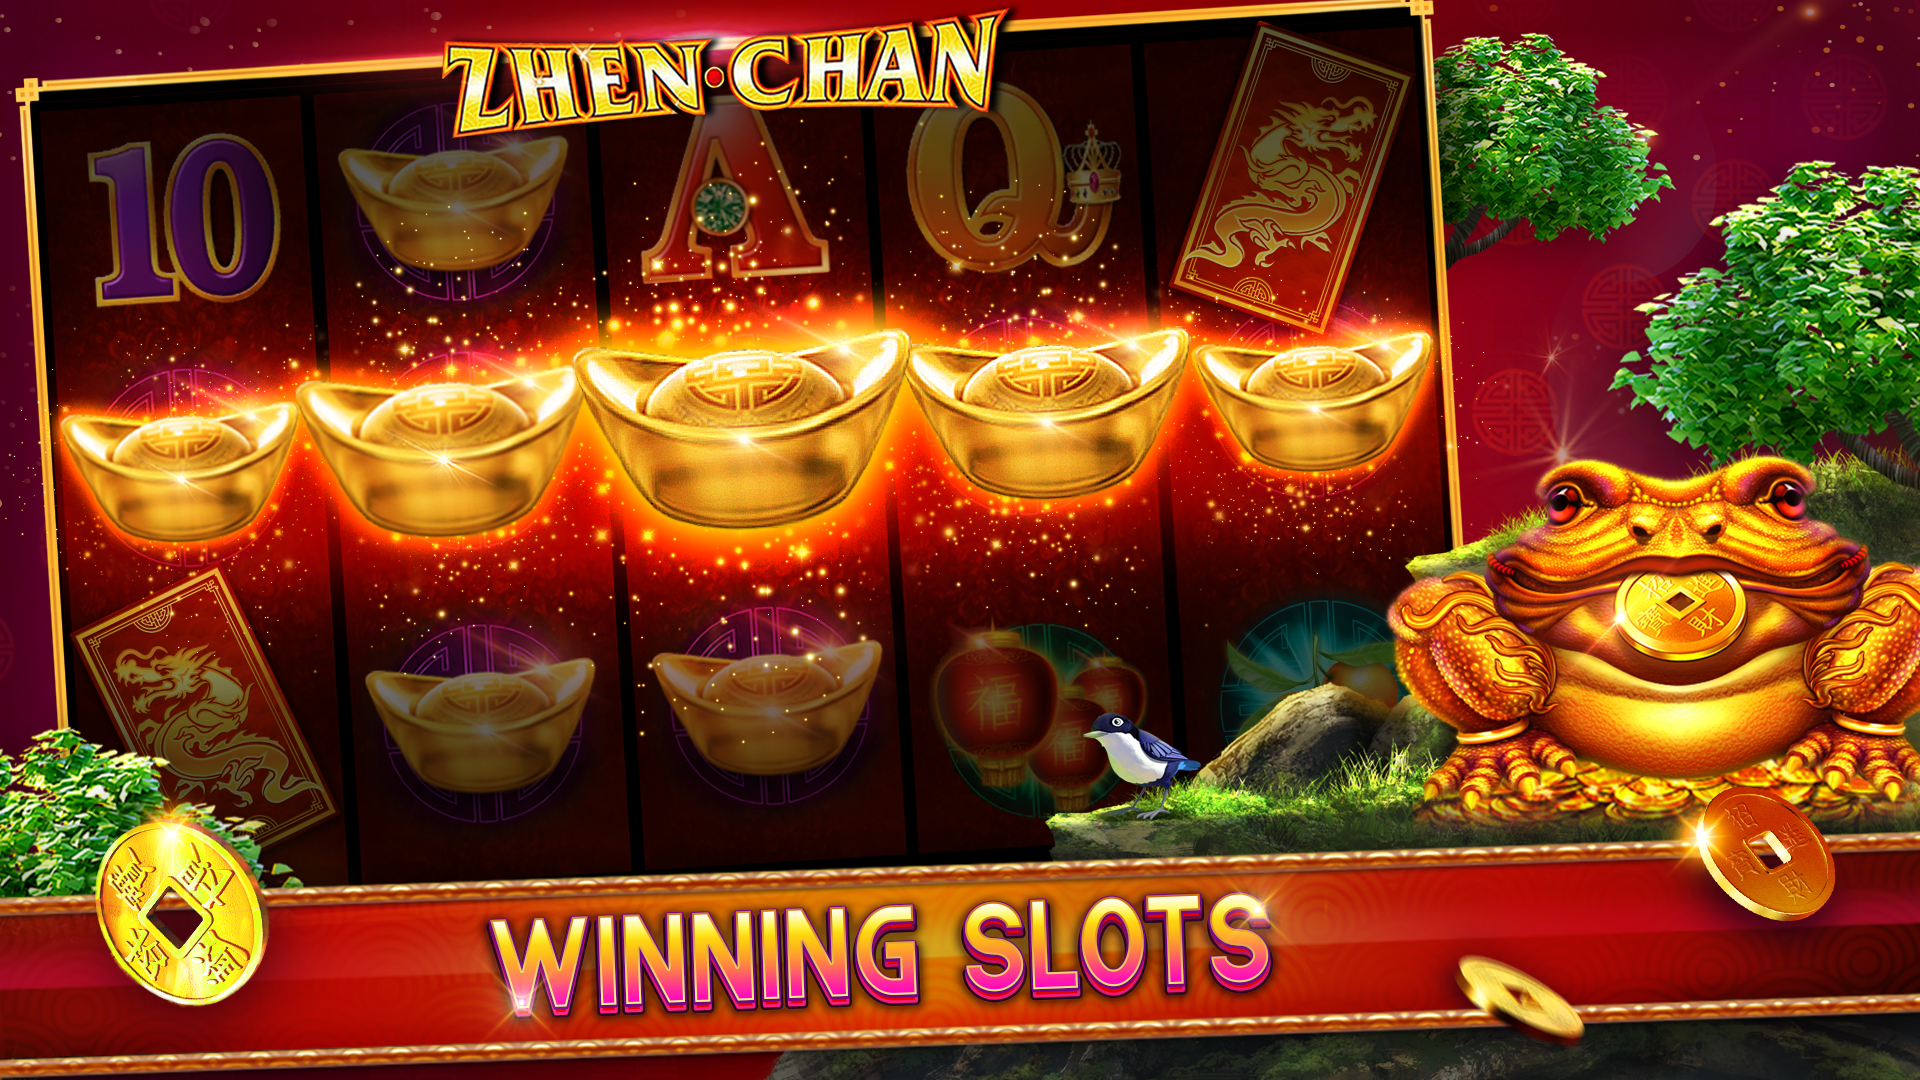 Play Mega Fortune - Chanz Online Casino - Chanz